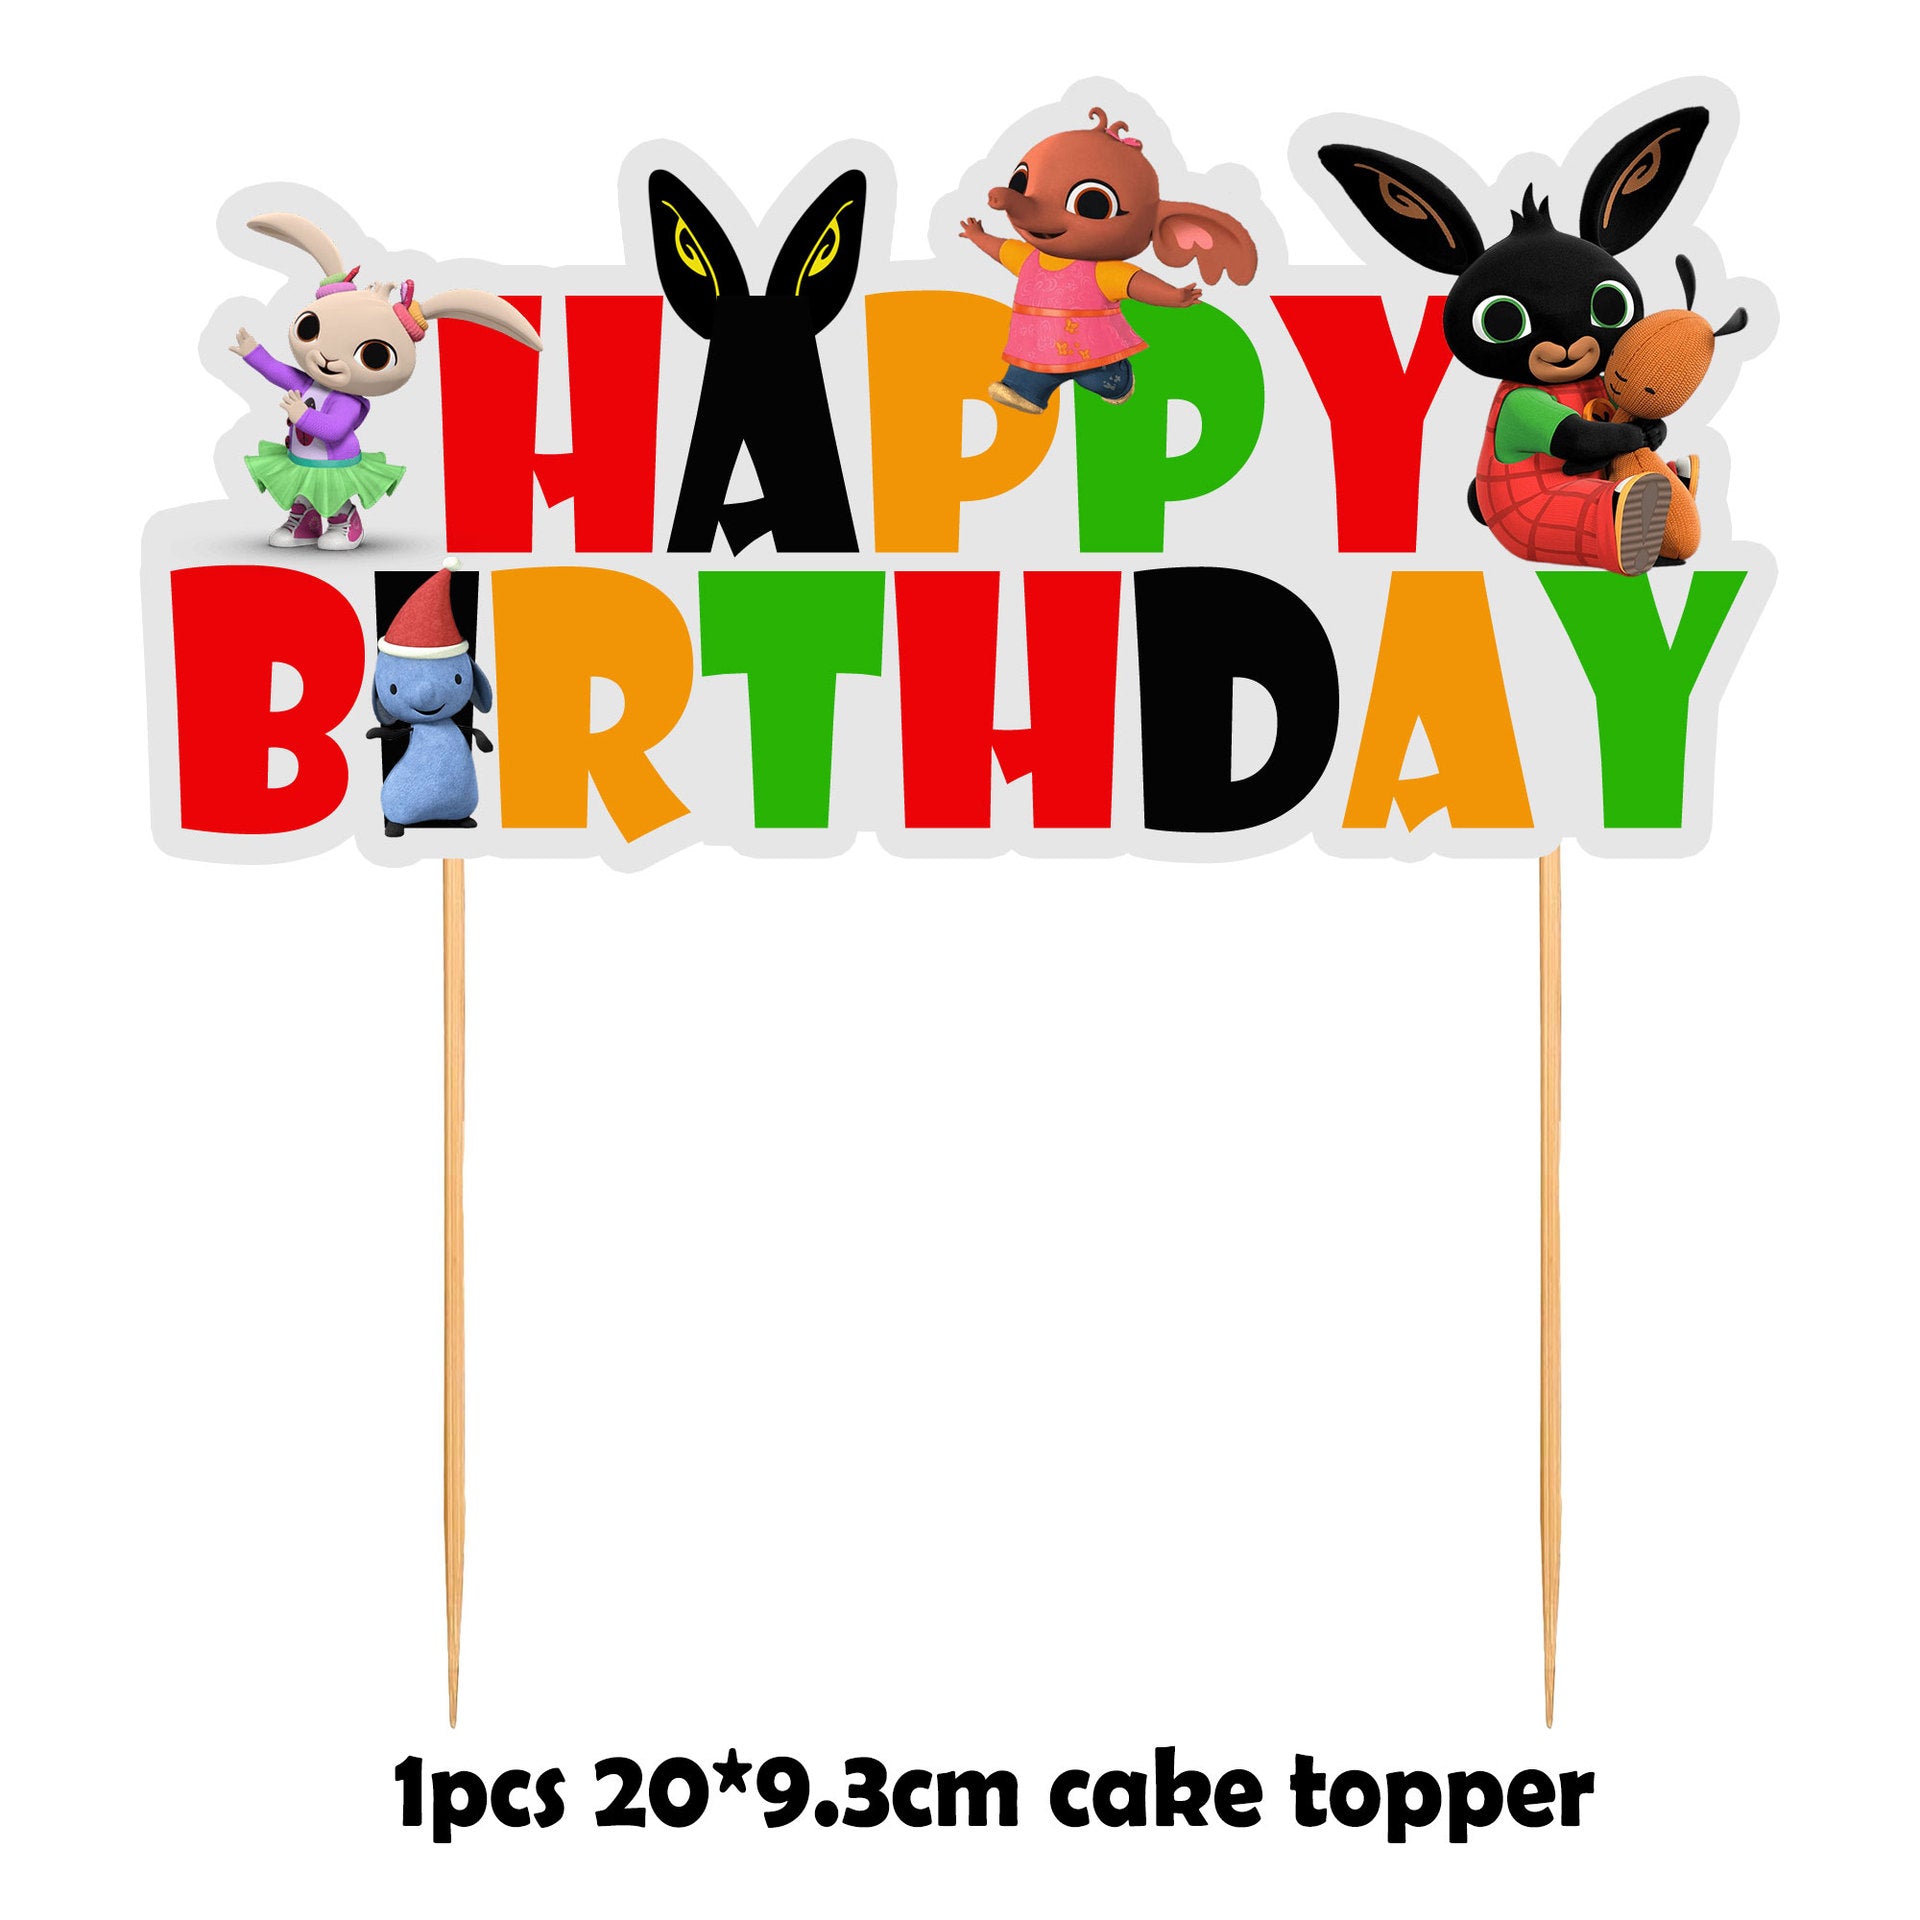 Bing Cake Topper / Bing Cake / Bing Party / Bing Birthday / Bing / Bing  Theme / Bing Extras / Bing Bunny / Bing Bunny Cake Topper -  UK